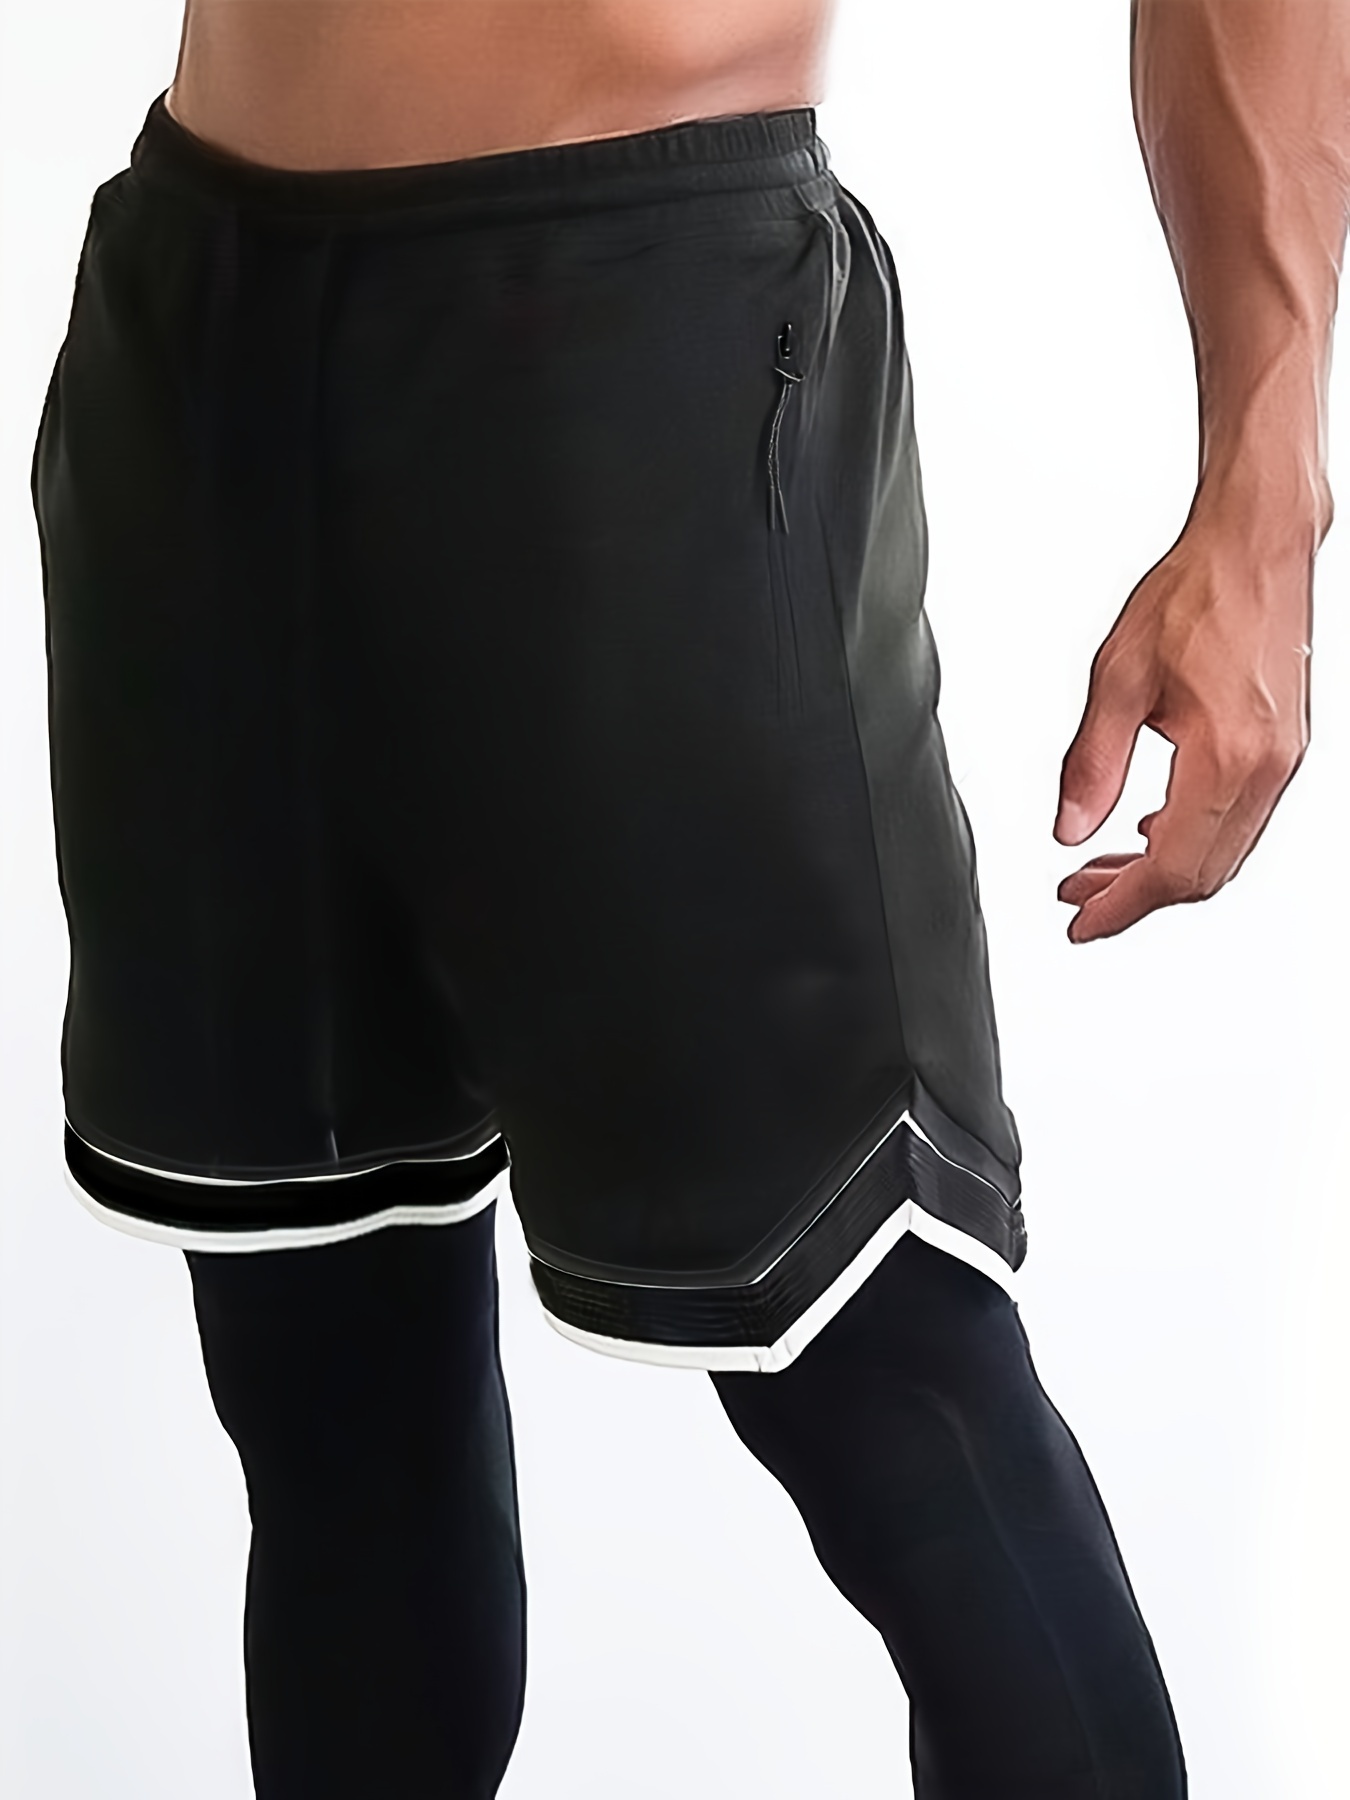 Honganda Fitness Basketball Shorts, Double Layer Lightweight Leggings 